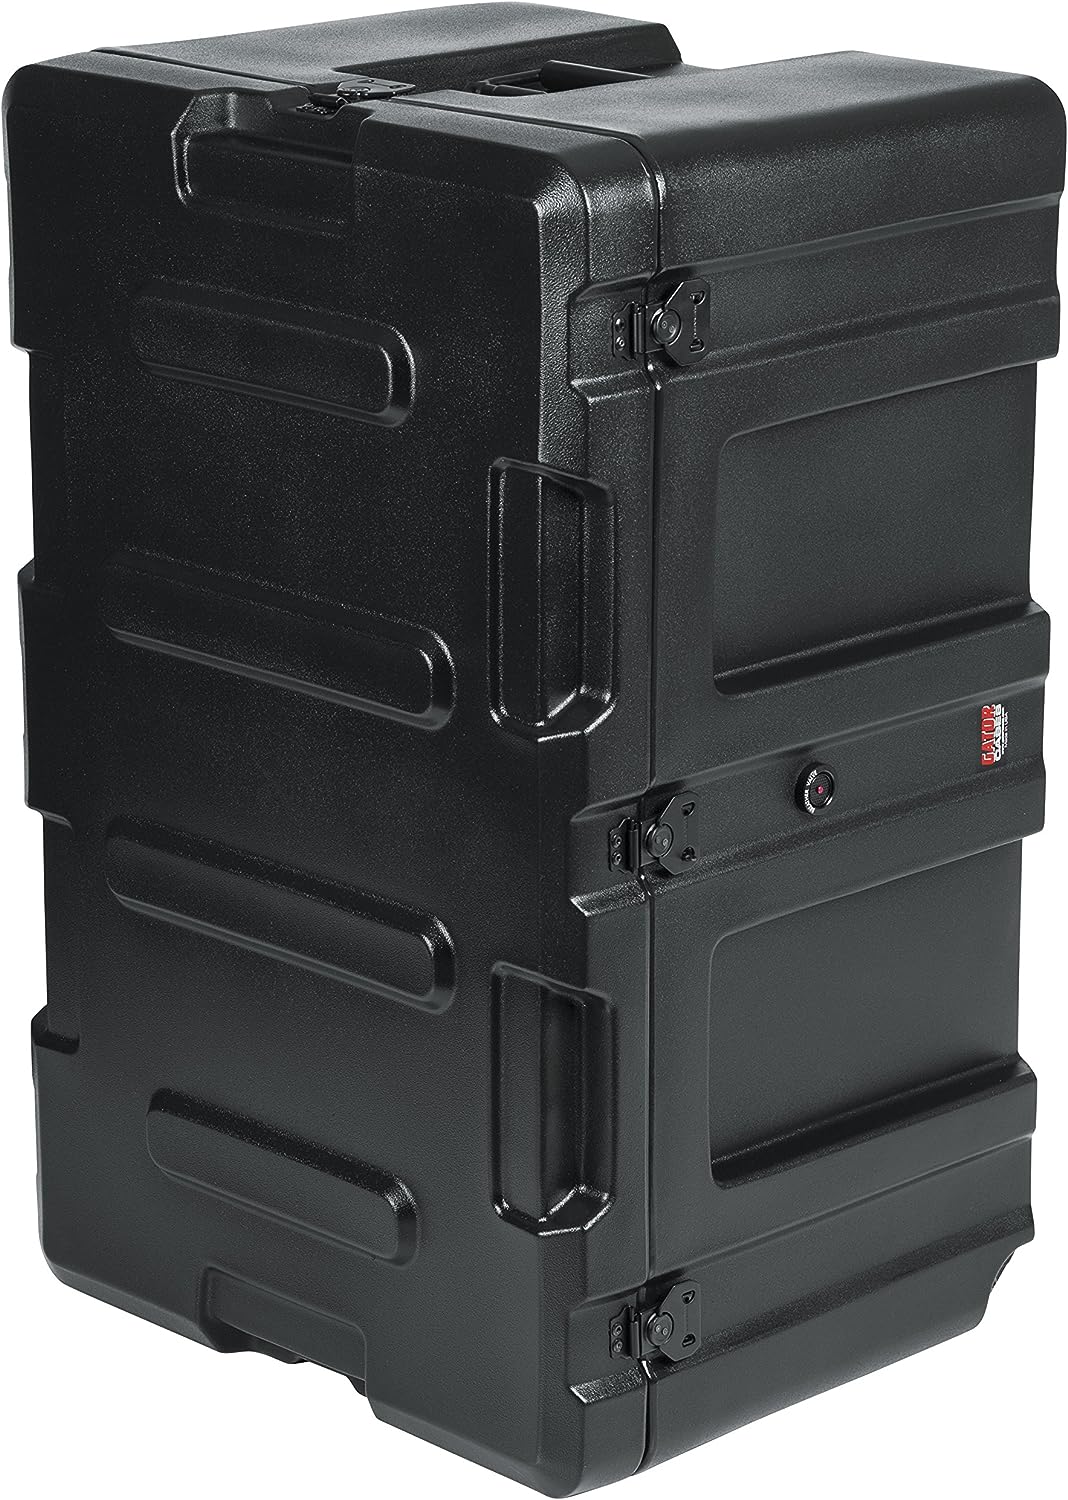 Gator Cases GXR-3219-1603 ATA Roto-Molded Utility Equipment Case; 32" x 19" x 19" Interior